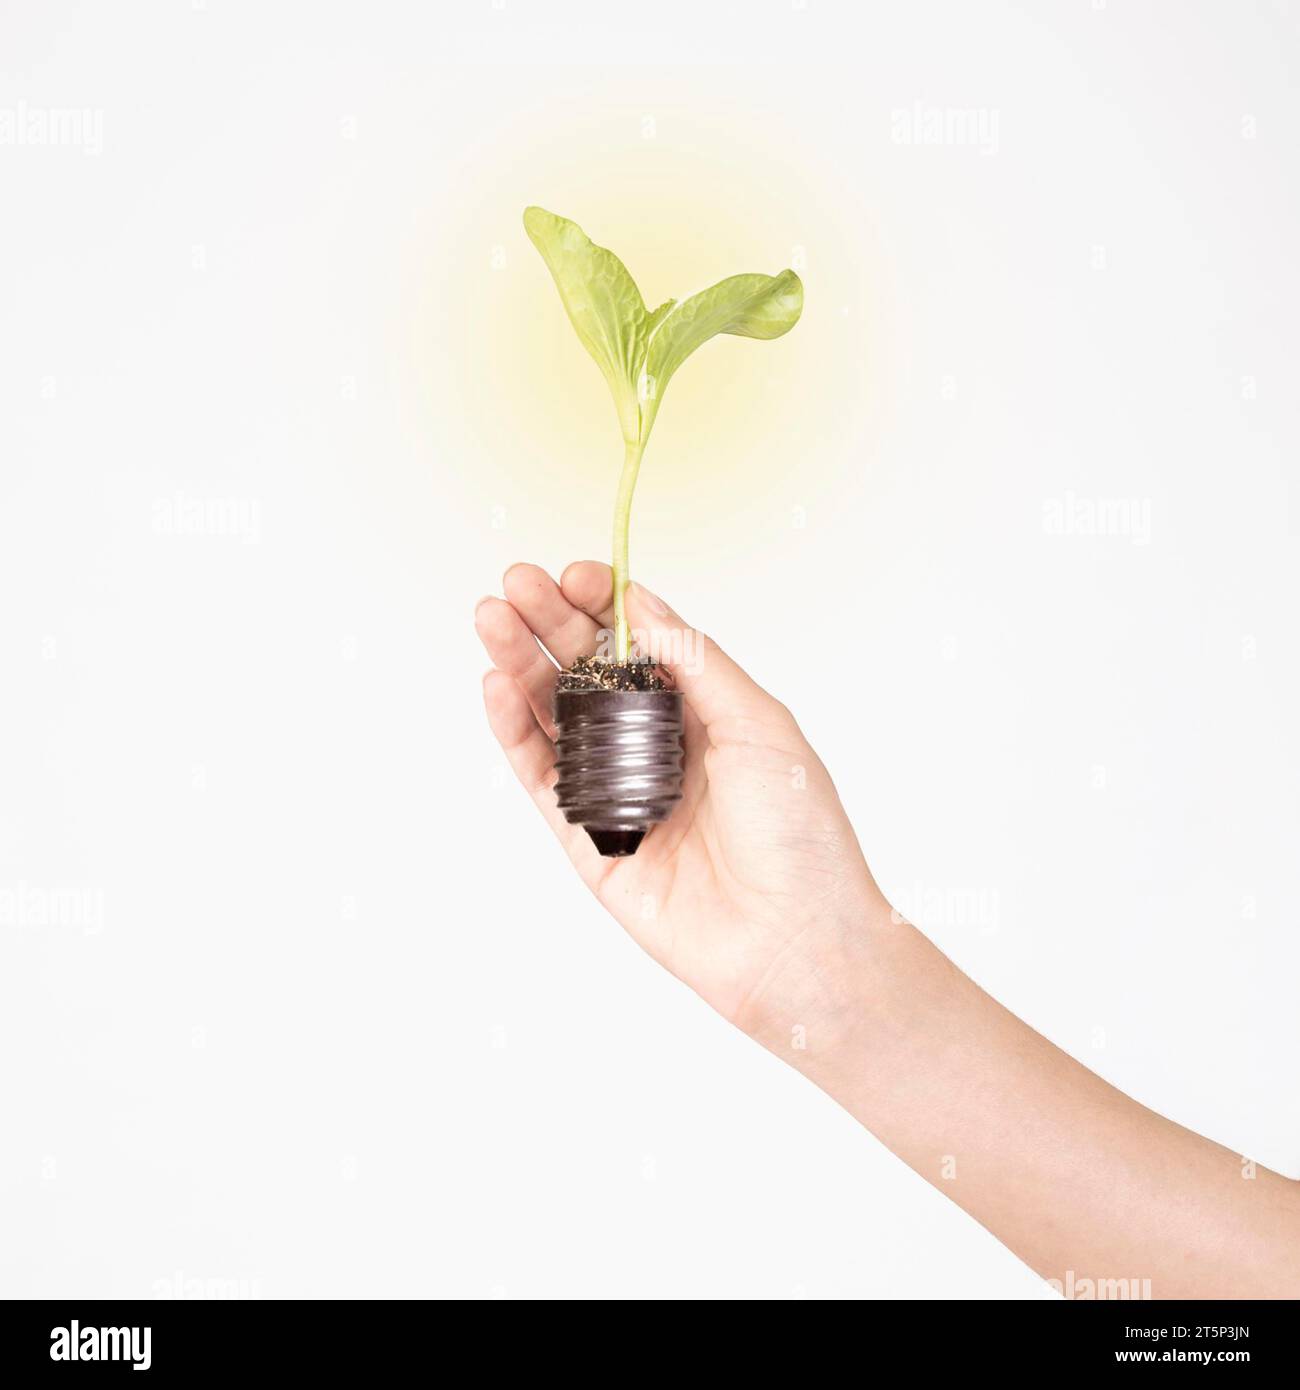 Crop hand holding plant germ Stock Photo